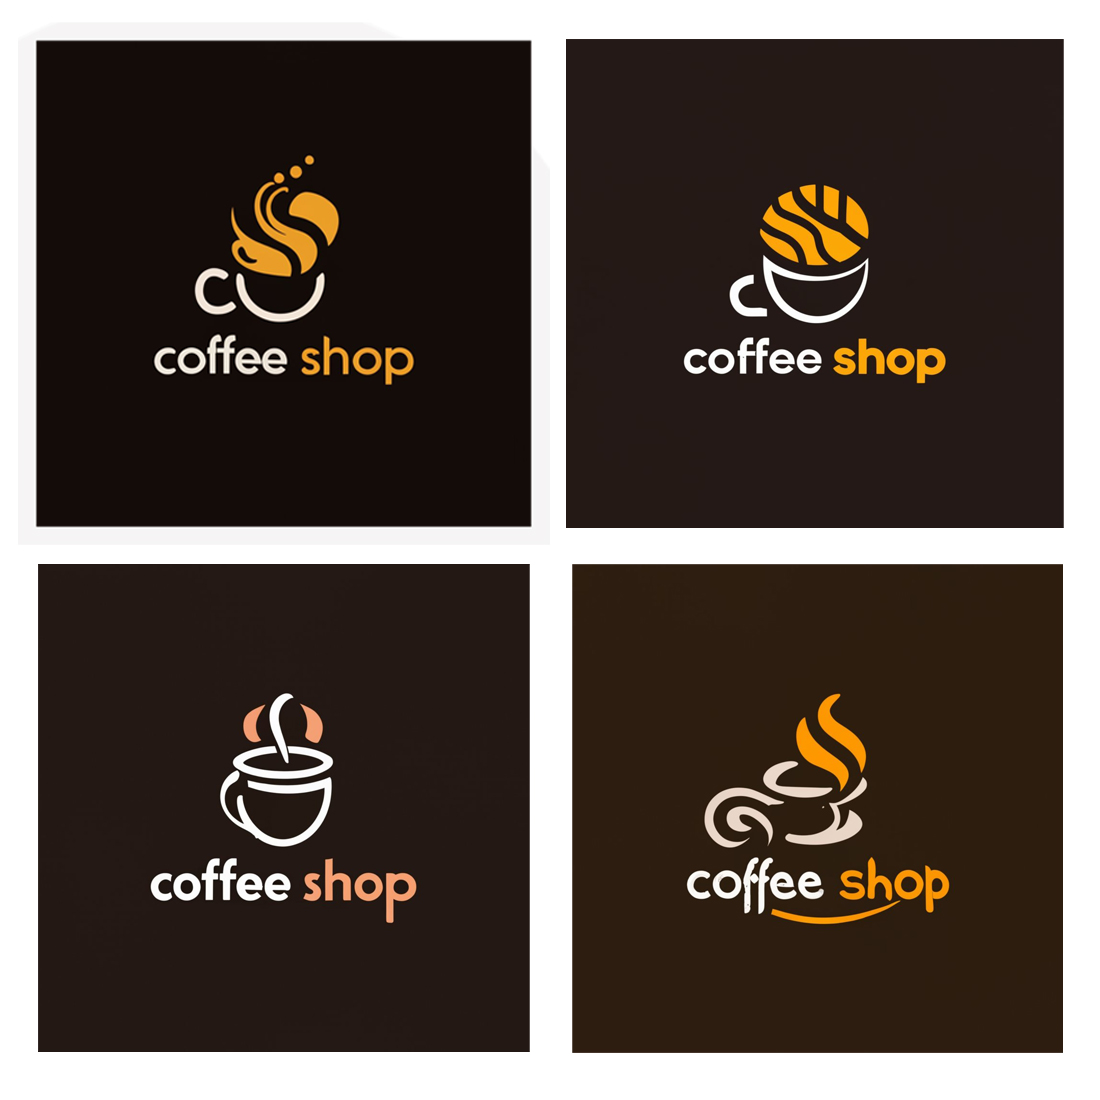 Coffee Shop - Logo Design Template cover image.